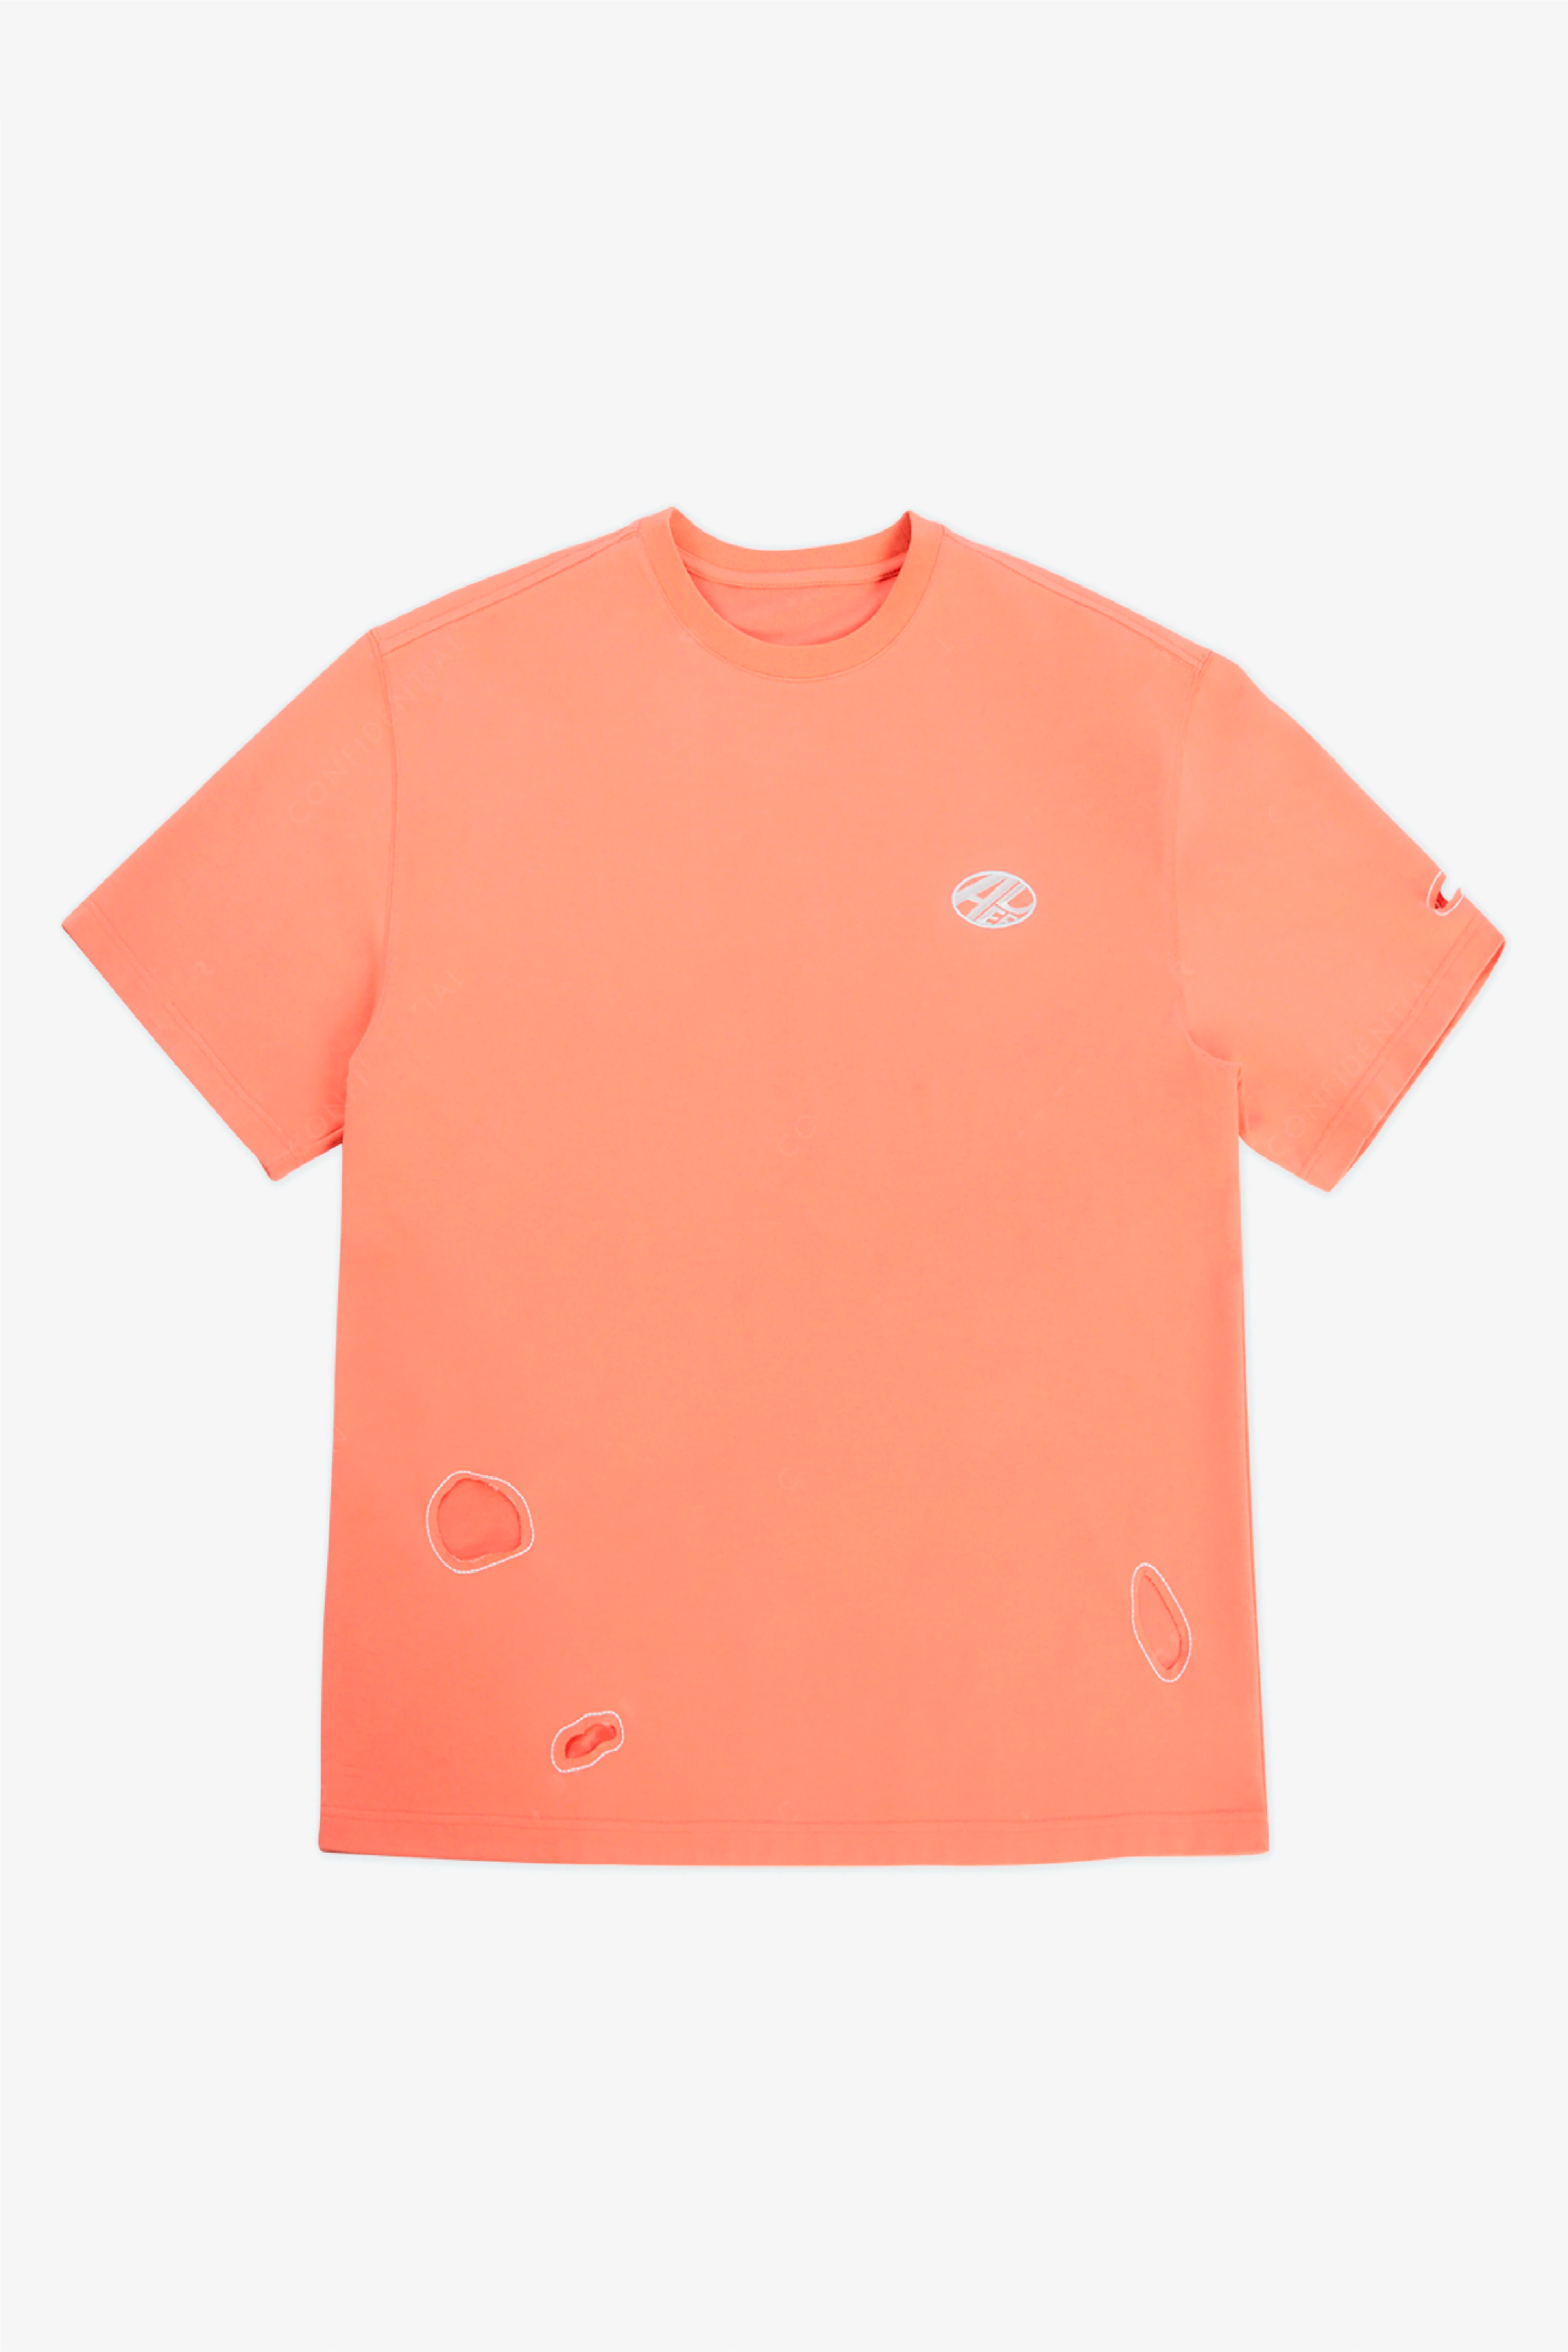 Selectshop FRAME - ADER ERROR Distort Logo Tee T-Shirts Dubai